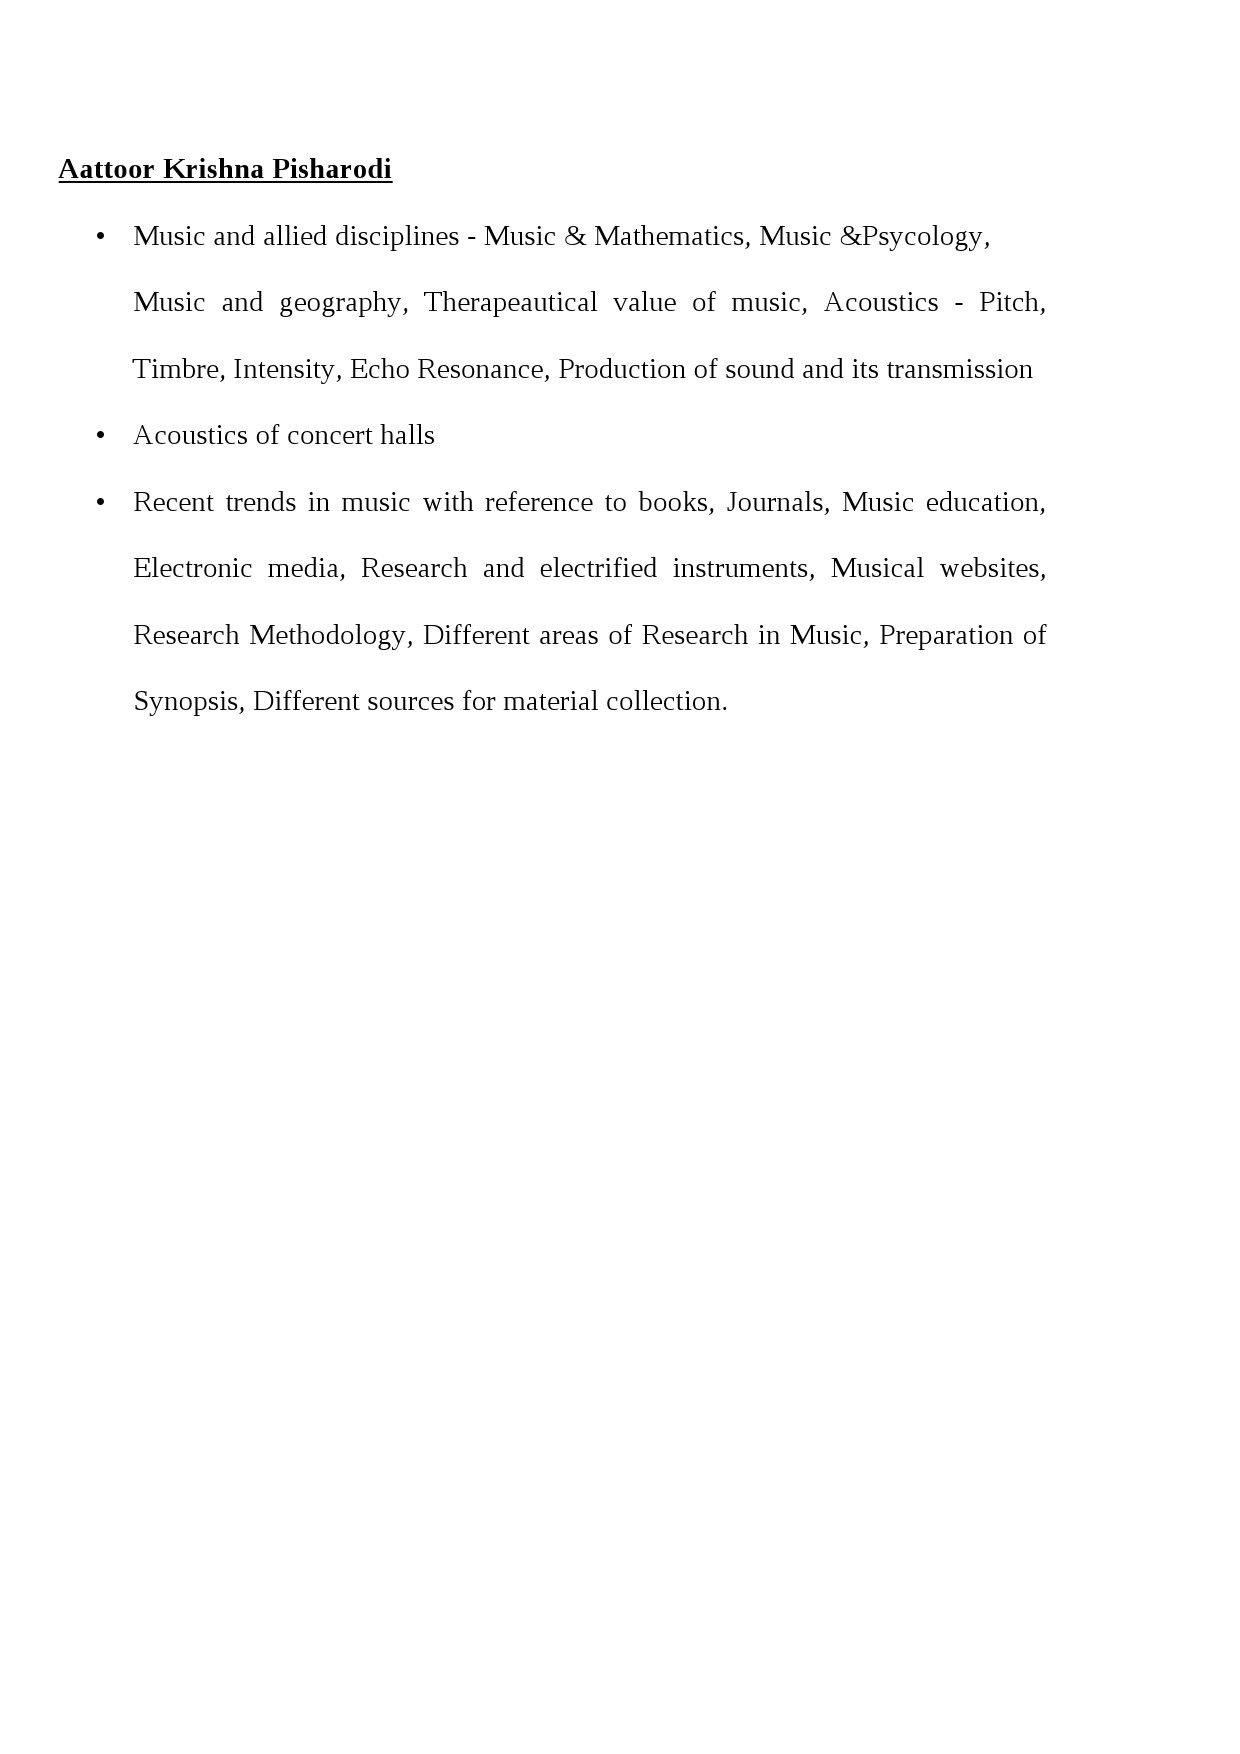 Humanities Syllabus for Kerala PSC 2021 Exam - Notification Image 19